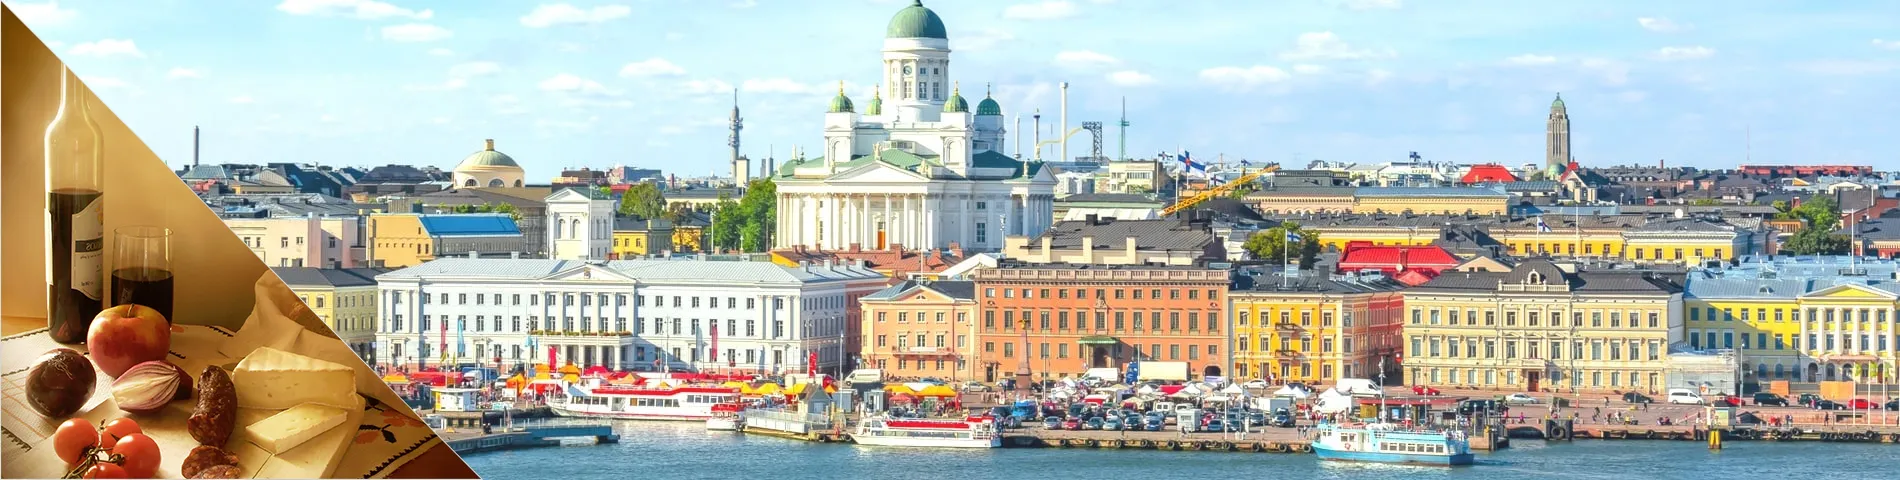 Helsinki - Finlandais & Culture